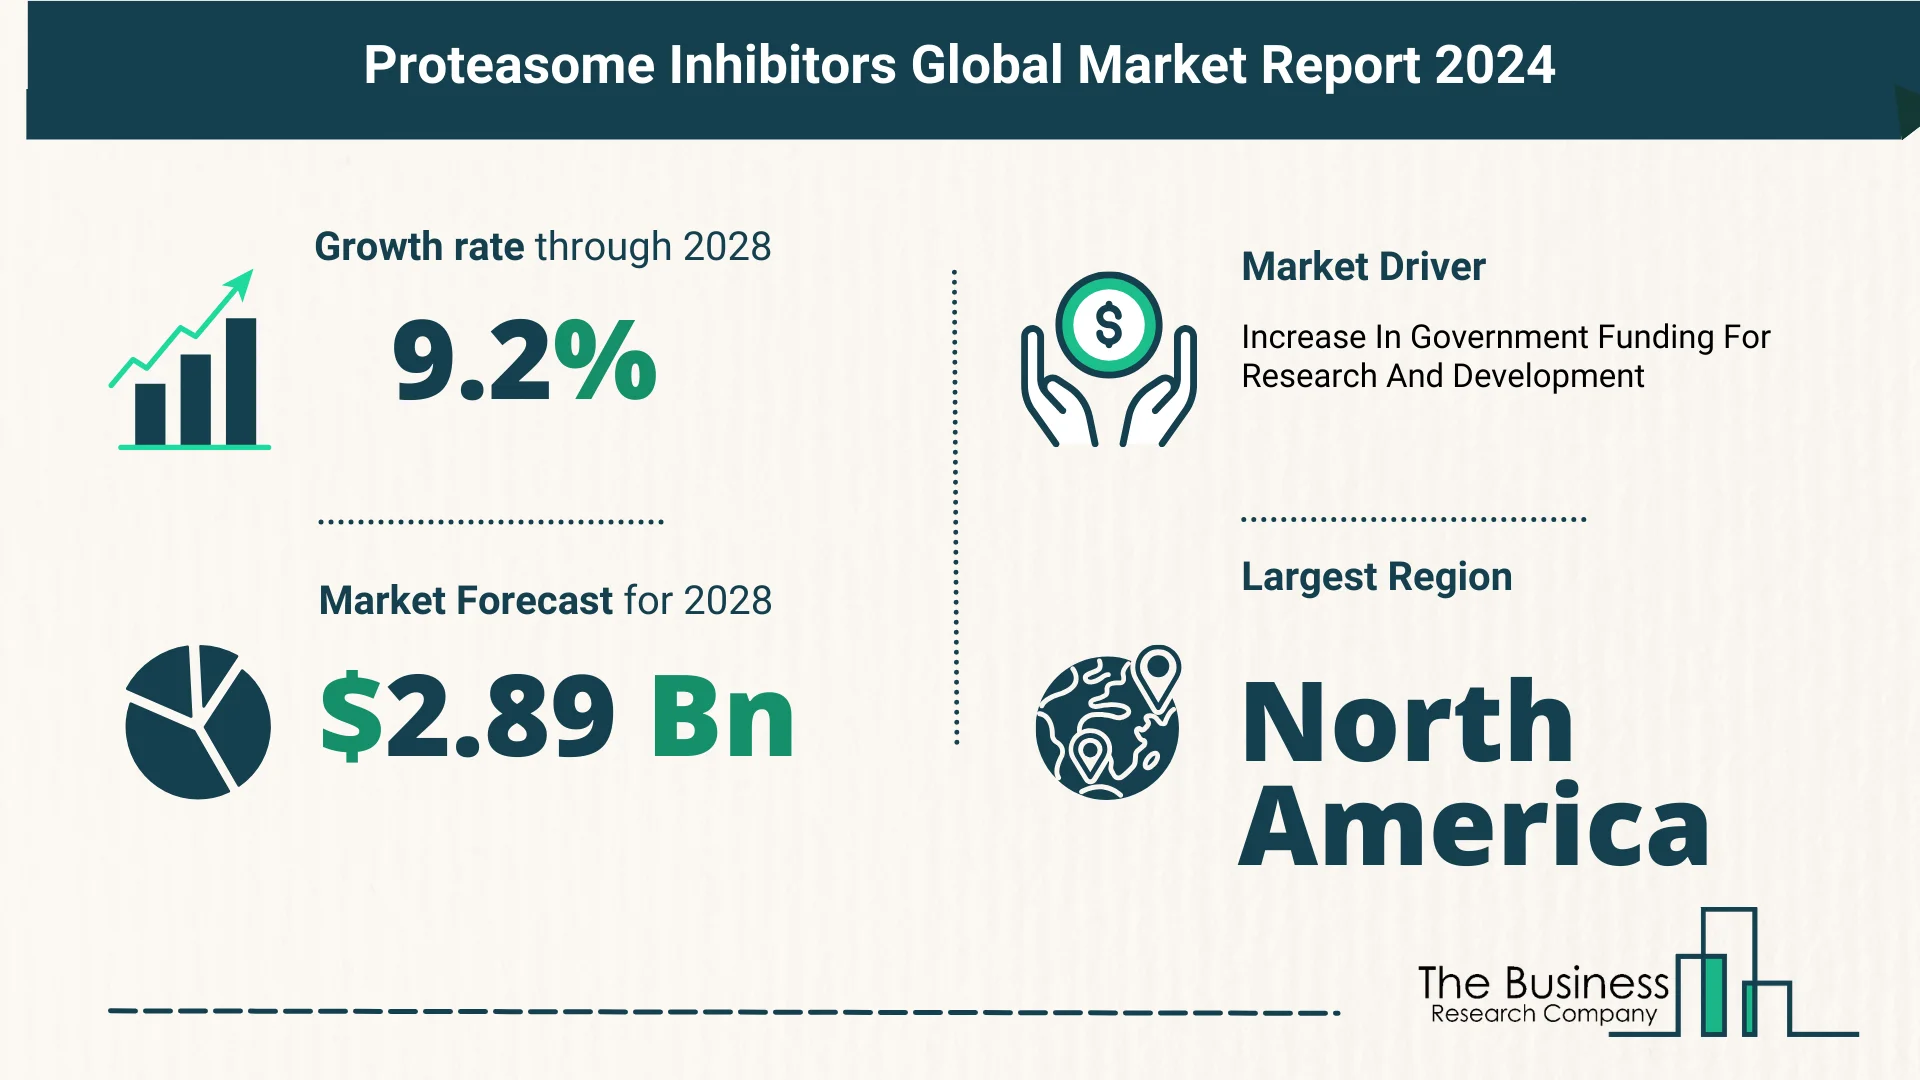 Global Proteasome Inhibitors Market Size